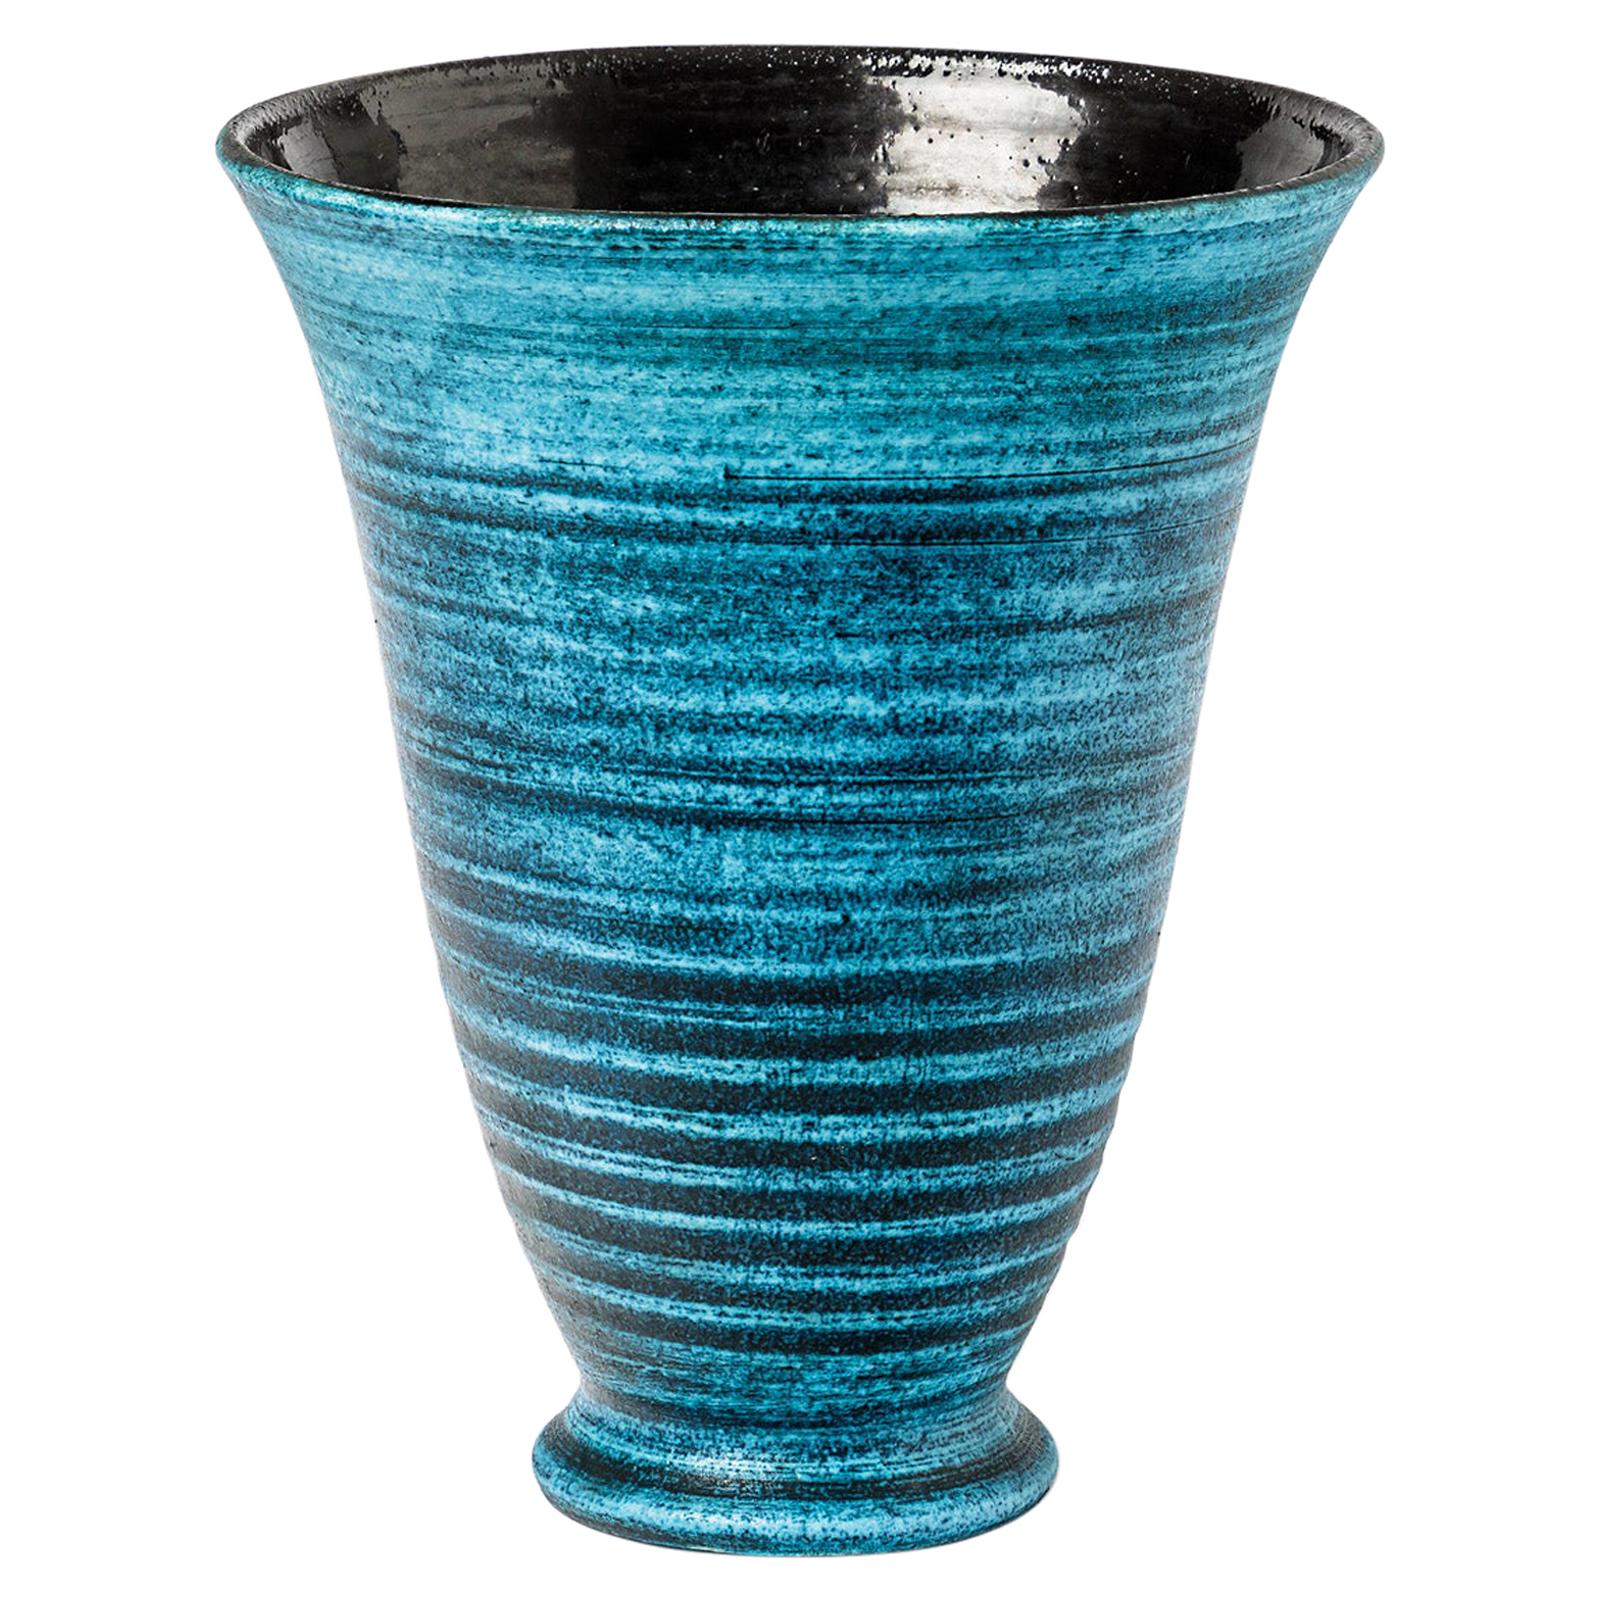 Ceramic Vase with Blue Glaze Decoration by Accolay, circa 1960-1970